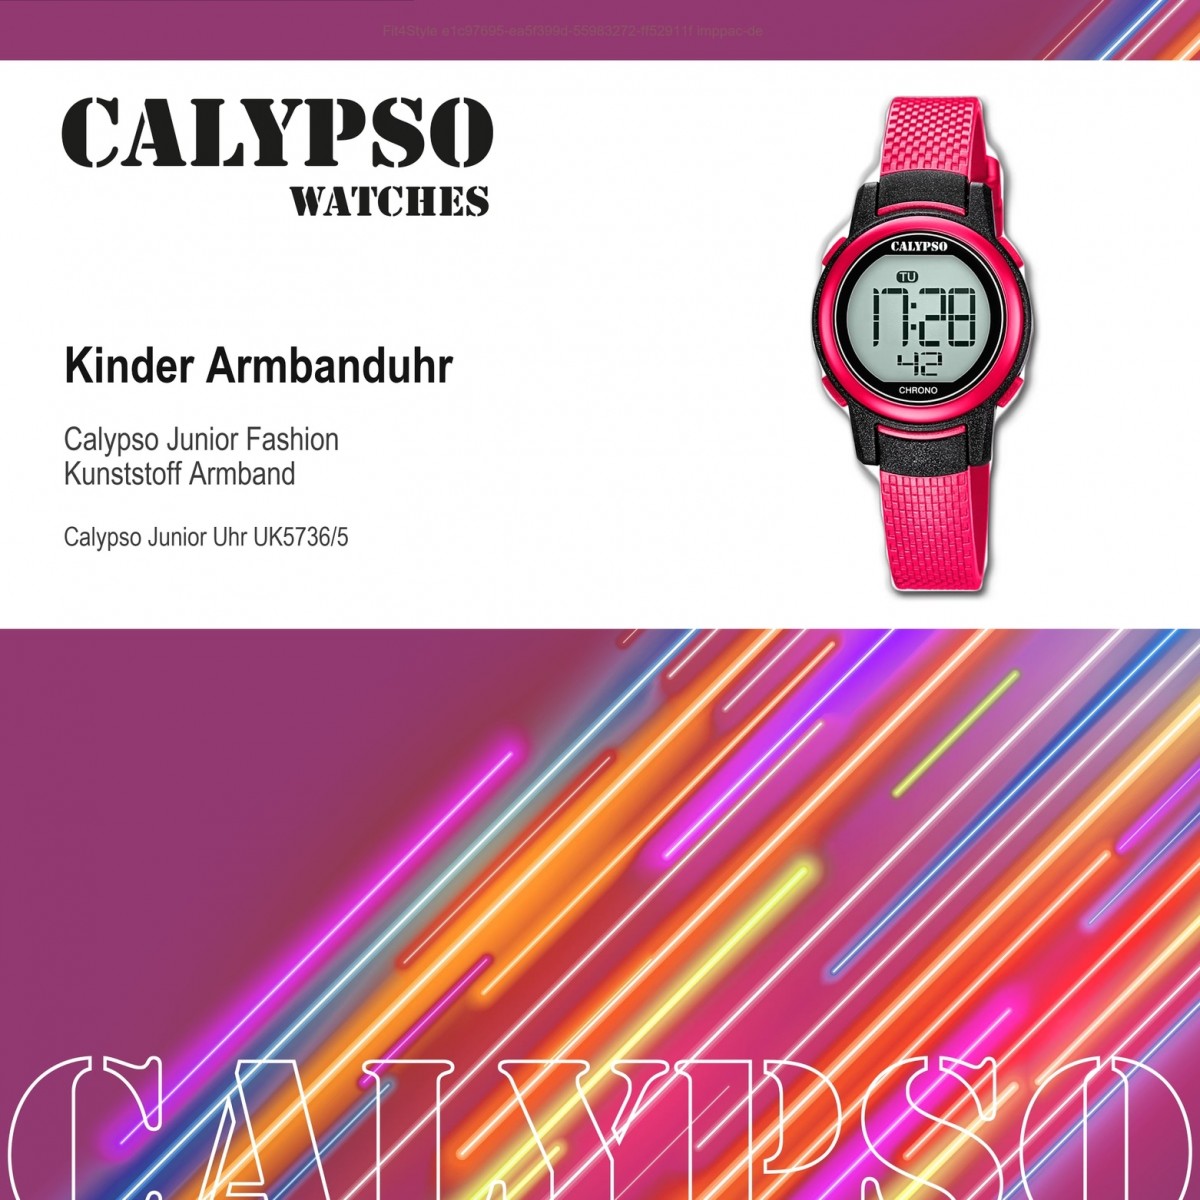 Calypso Kinder Armbanduhr Digital pink UK5736/5 Crush PU K5736/5 Quarz-Uhr